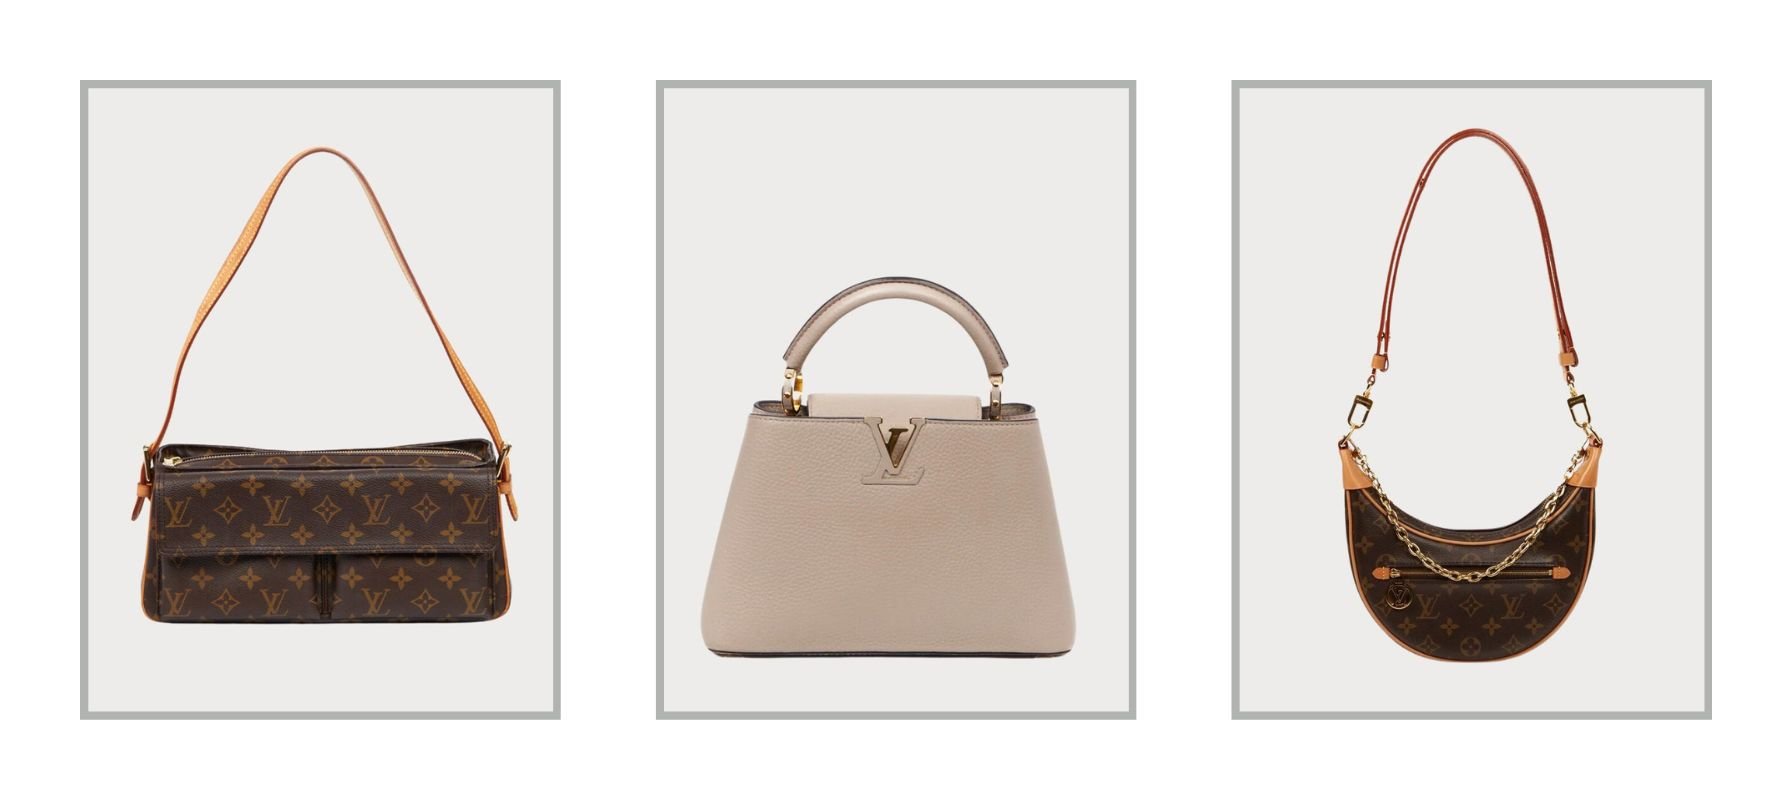 Louis Vuitton Used Handbags on Sale | Buy & Sell Used Designer Handbags